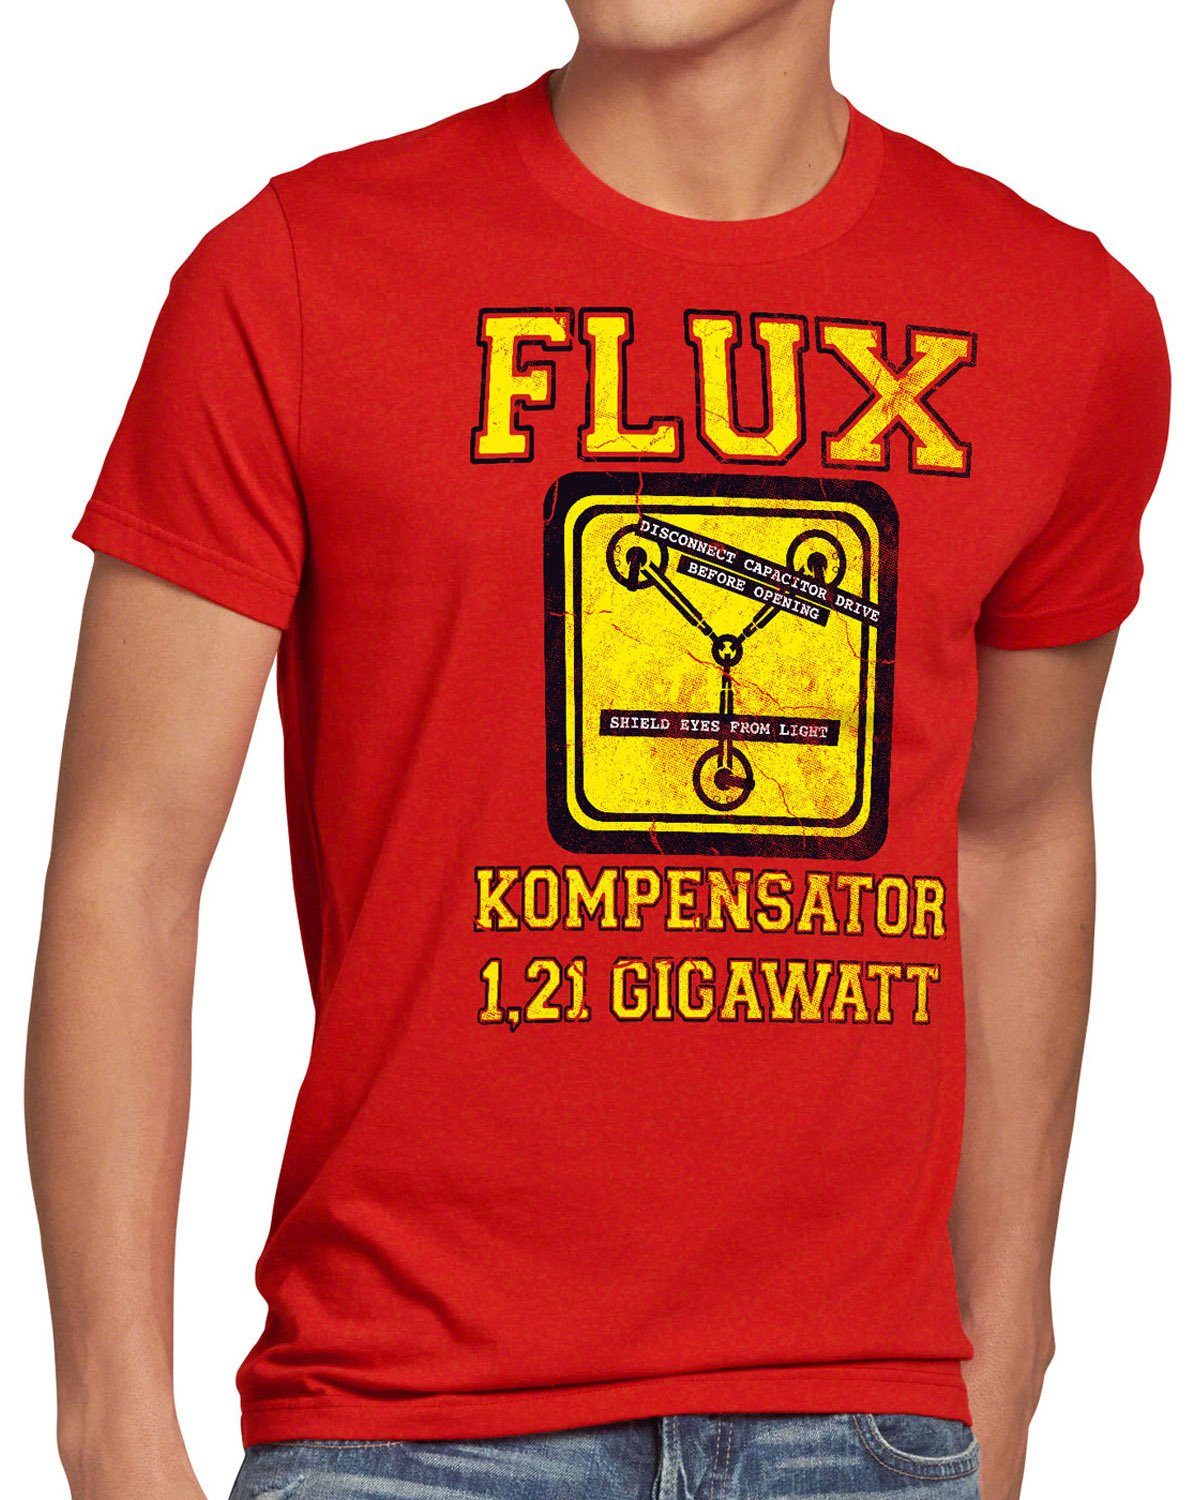 style3 Print-Shirt Herren T-Shirt Flux Kompensator Future Gamer Zukunft Zurück Zeitreise delorean rot